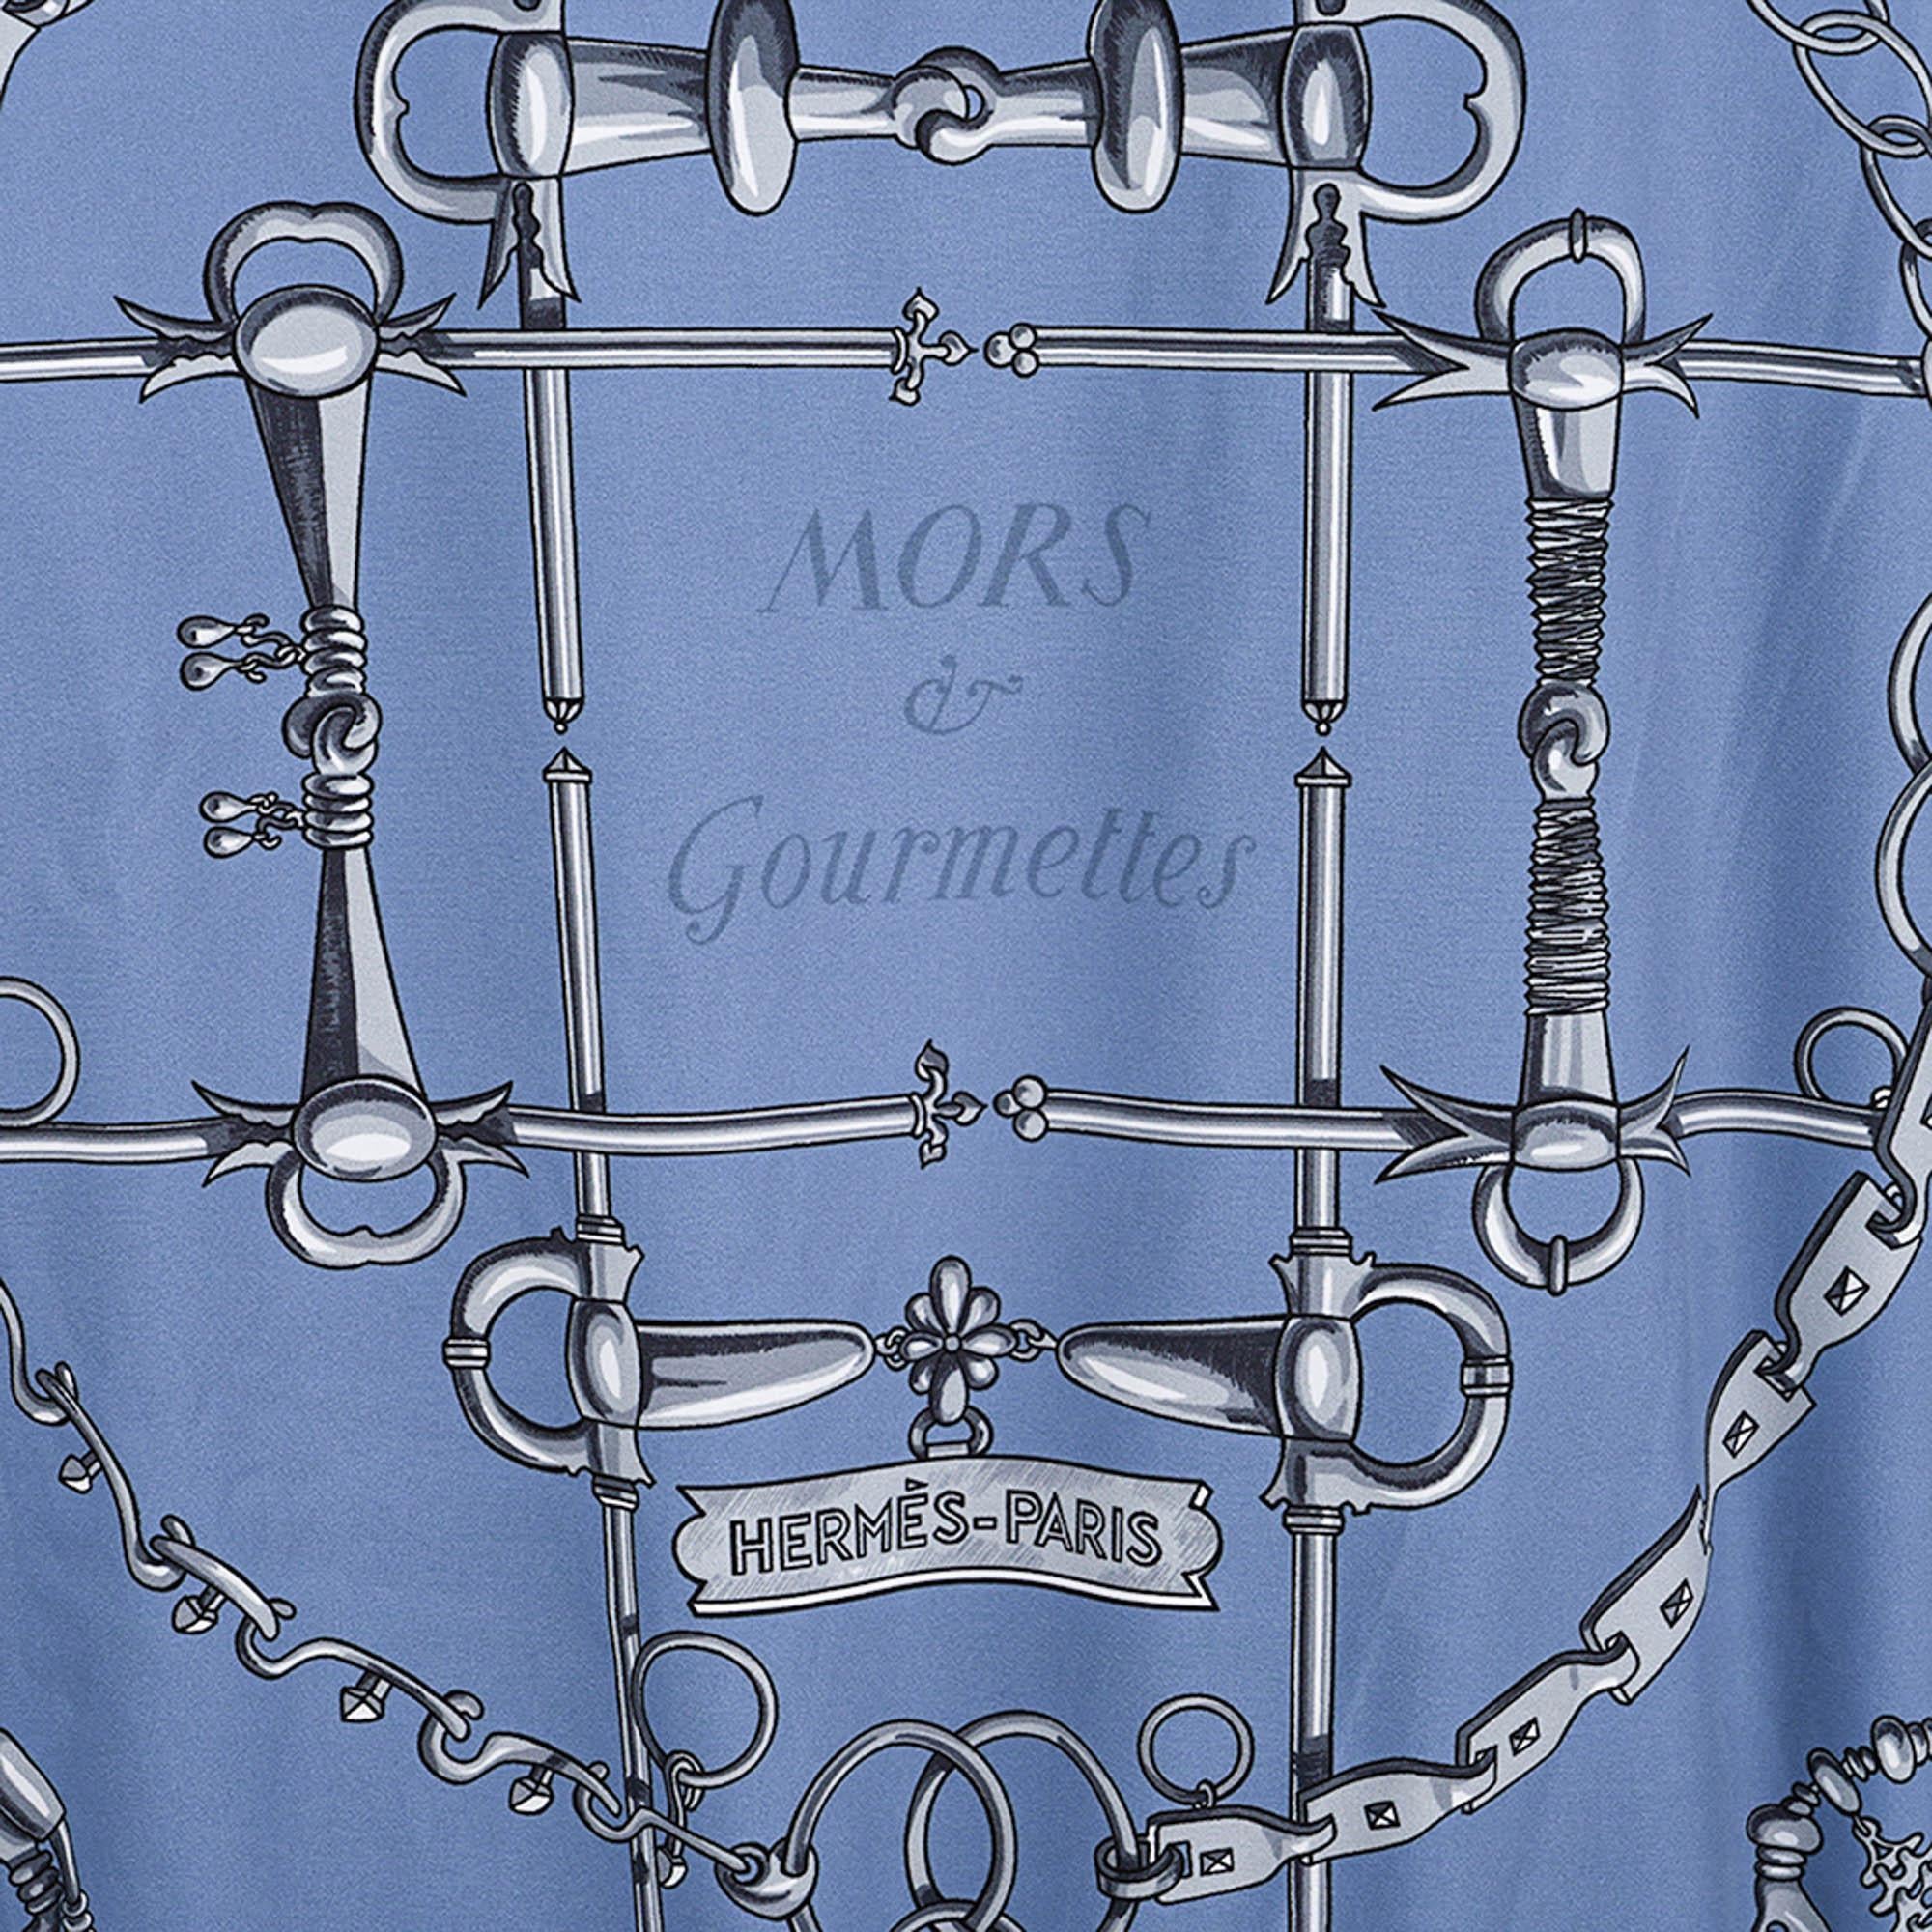 Hermes Homme Mors et Gourmettes Soie Shirt Jacket Blue Reversible Windbreaker 50 en vente 1